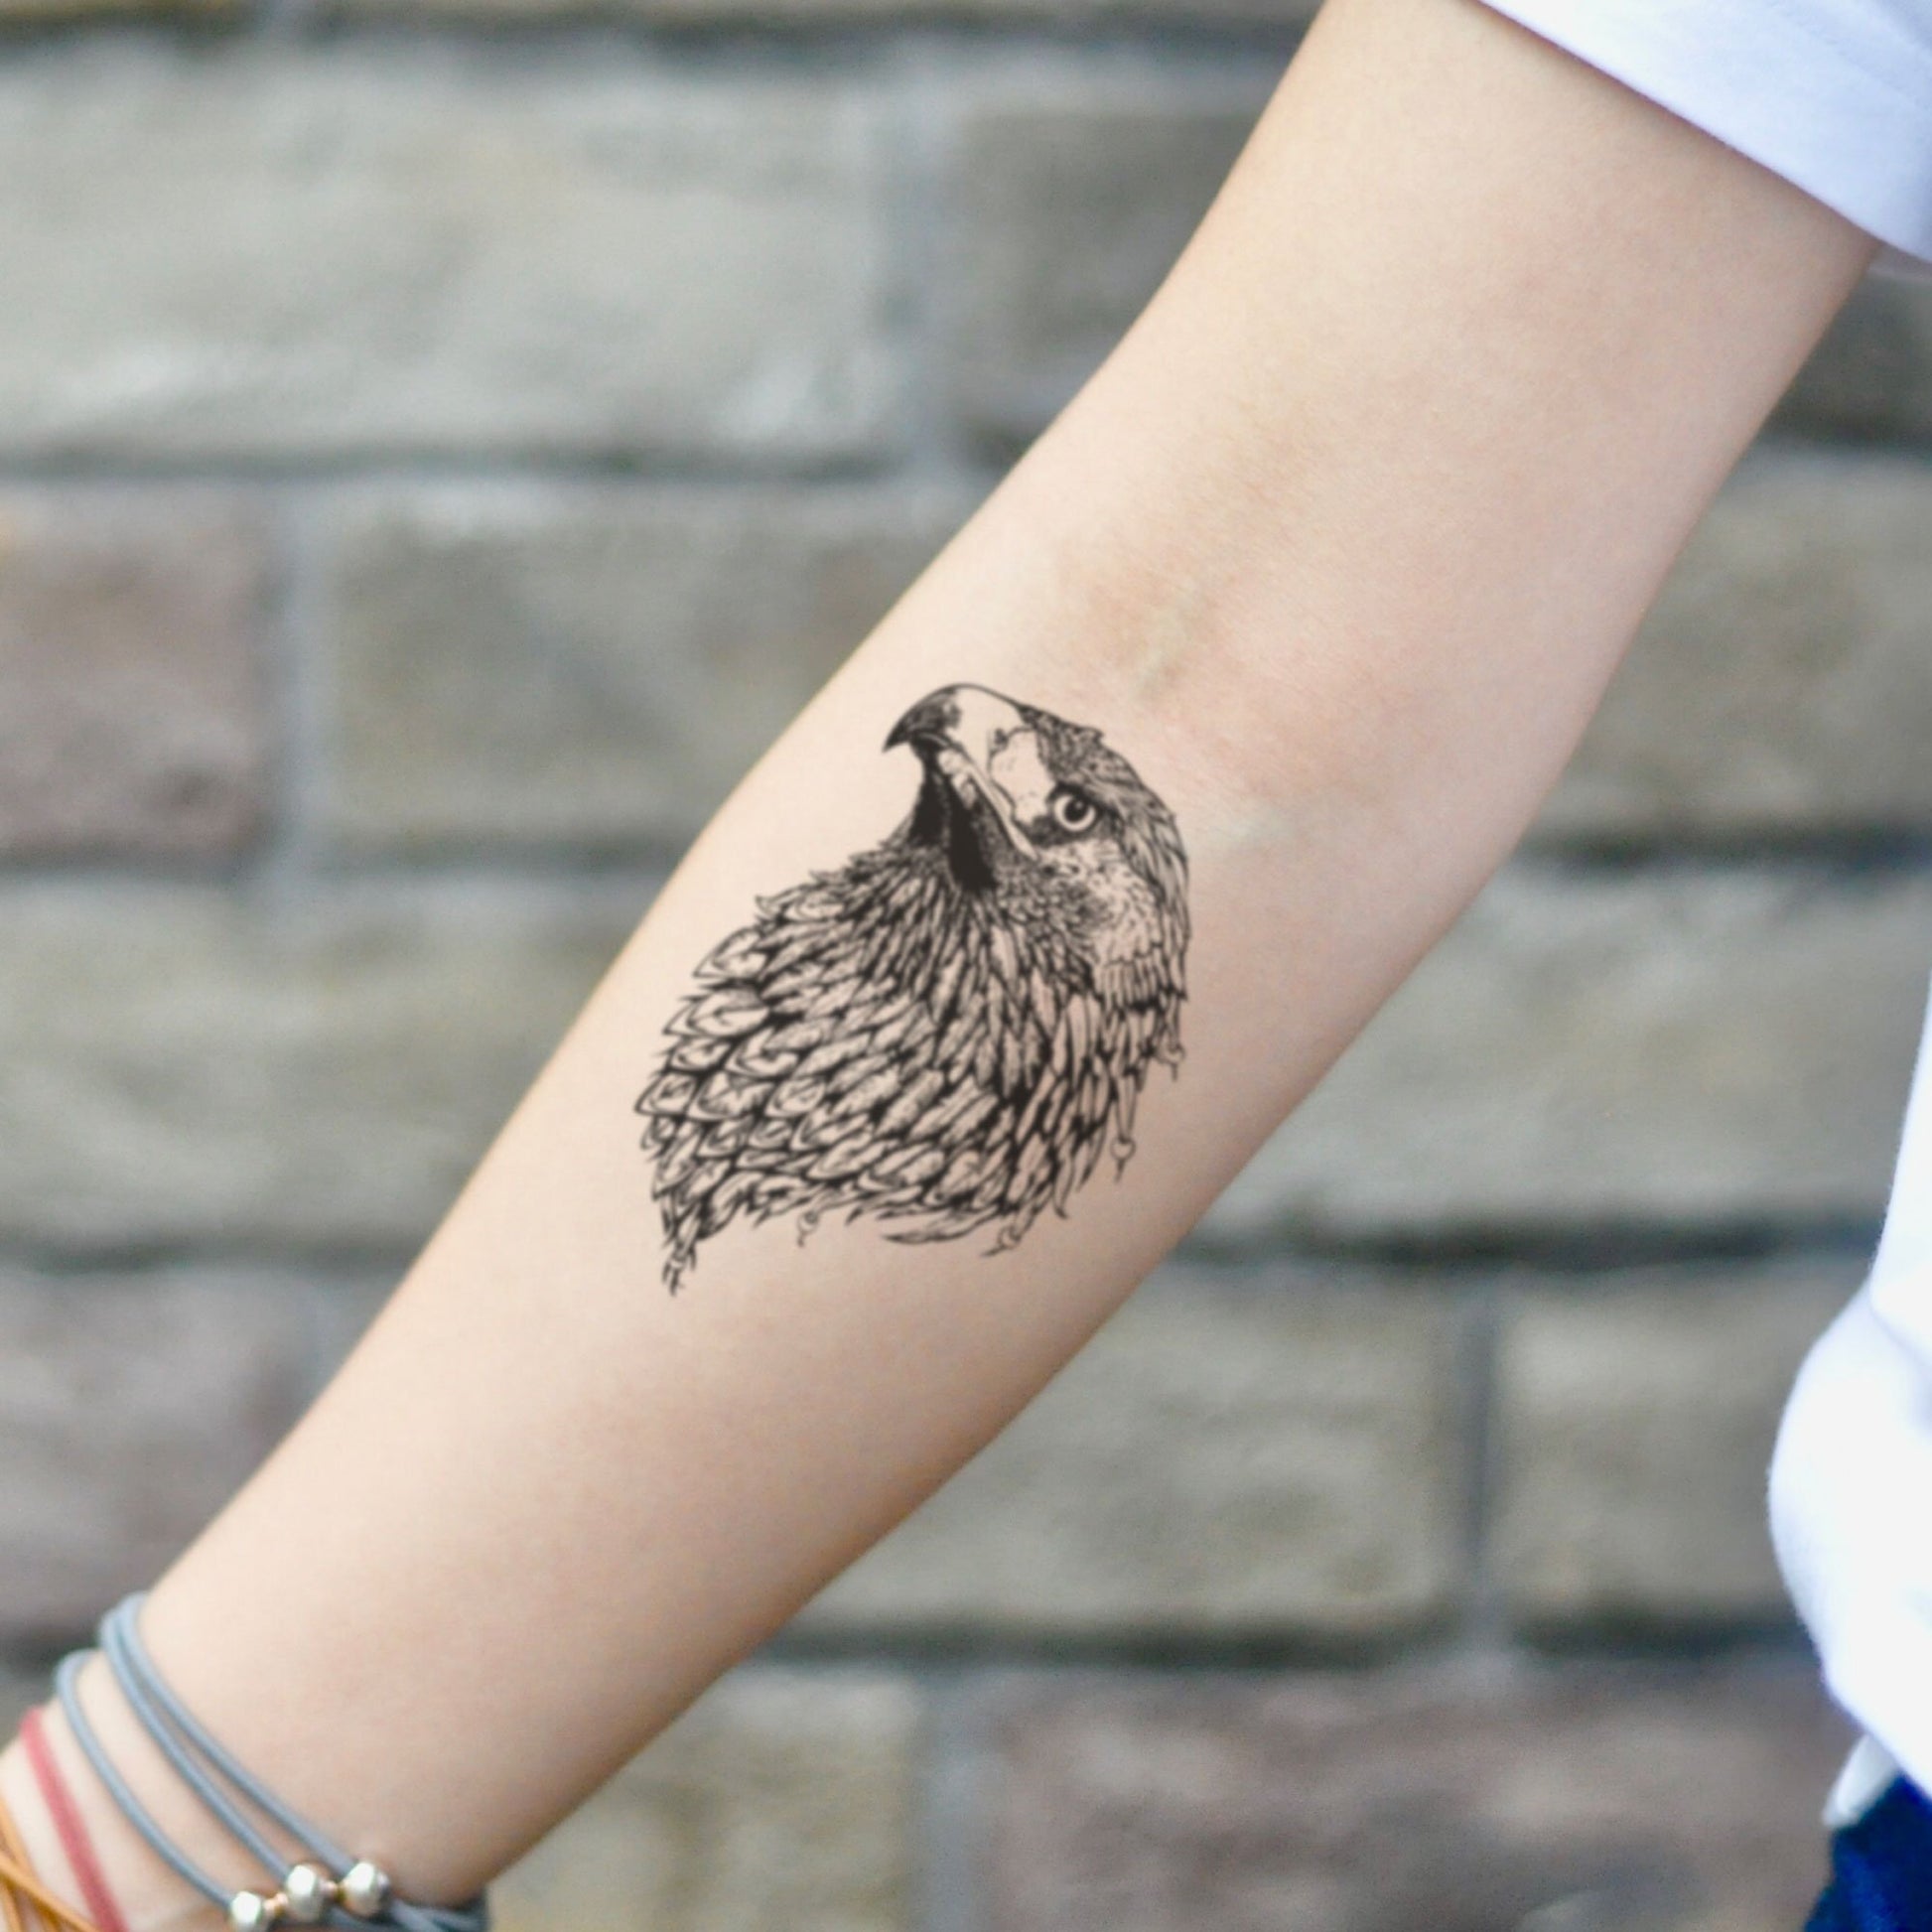 fake small aguila eagle head animal temporary tattoo sticker design idea on inner arm